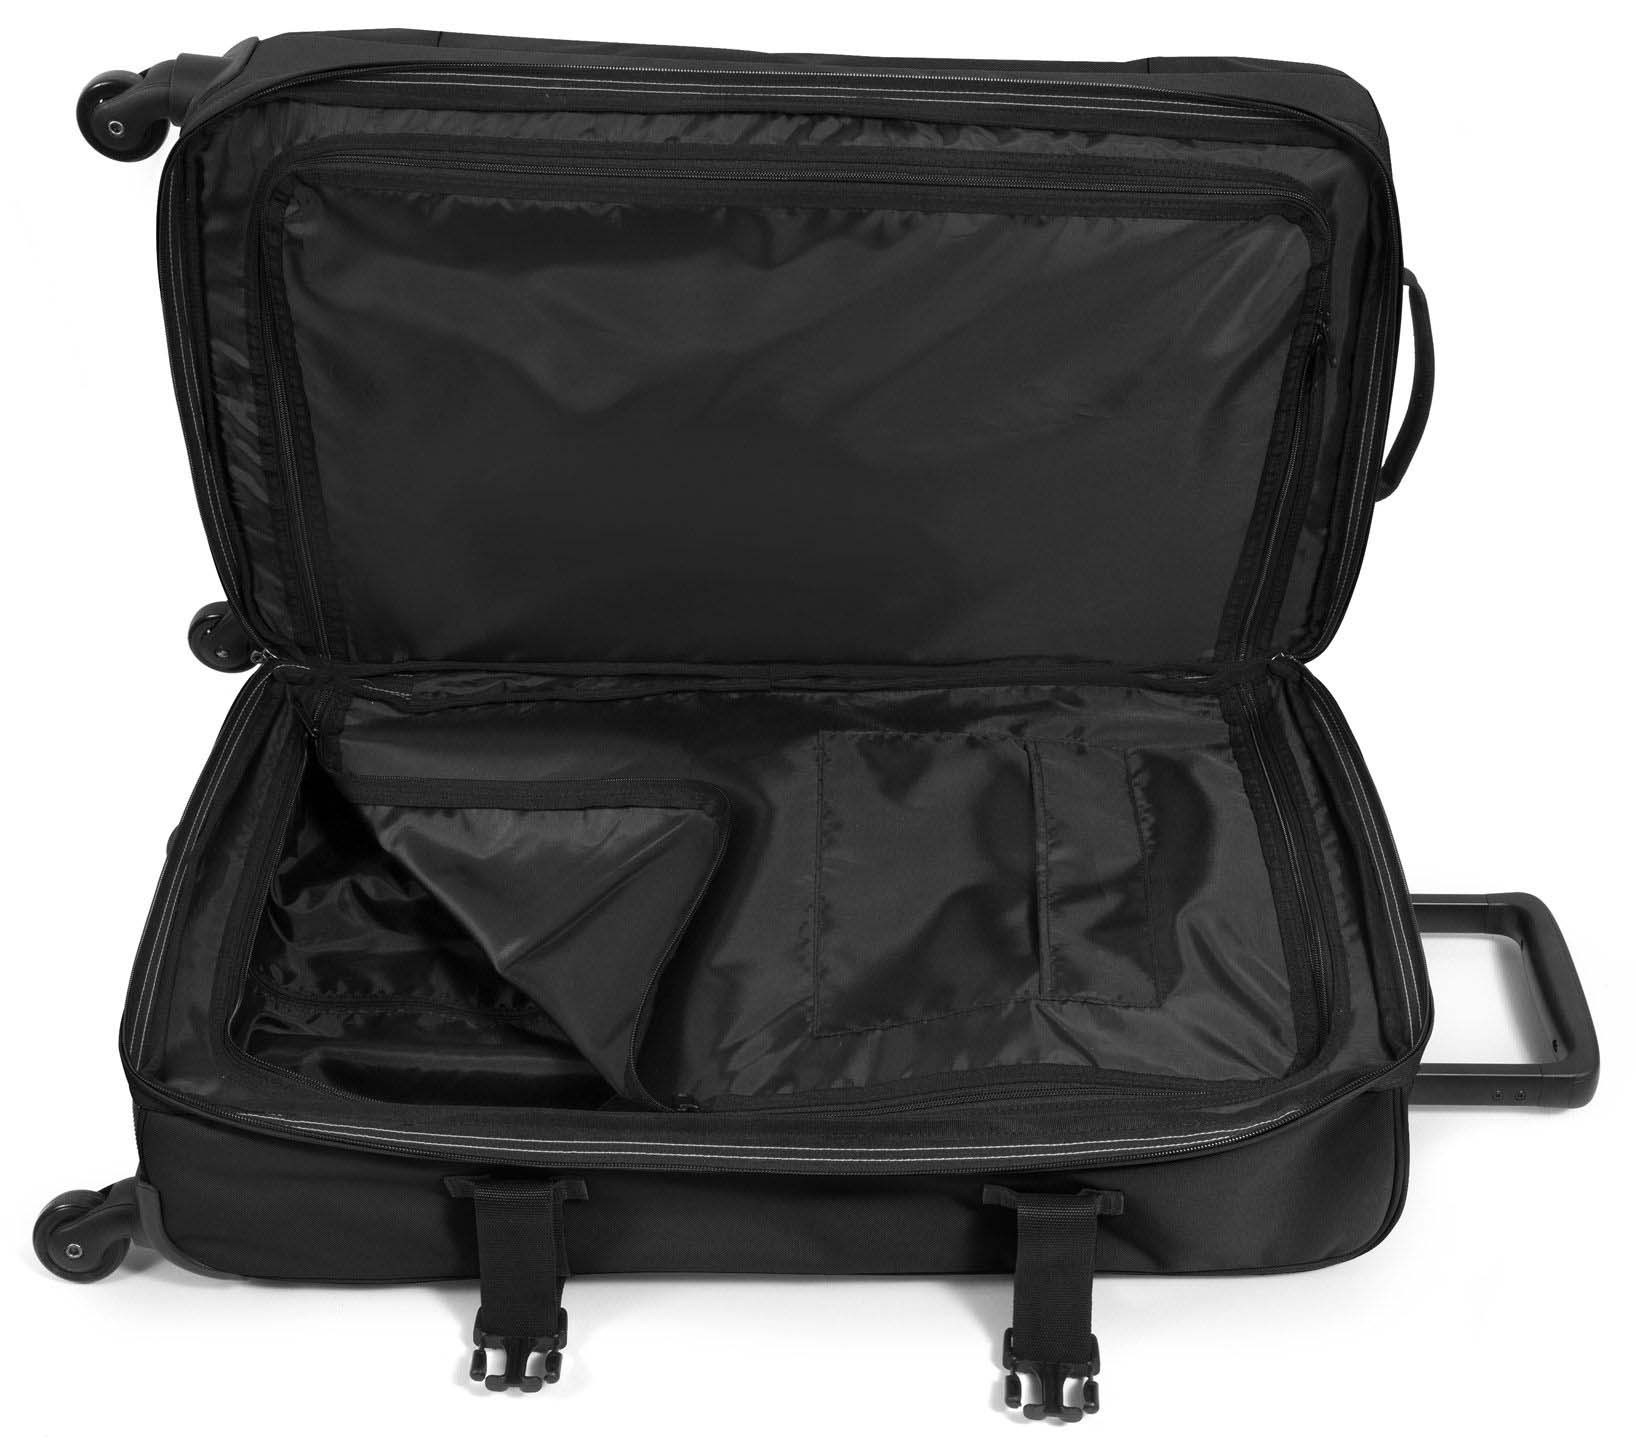 Eastpak Trans4 M 68 Wheeled Bag/Suitcase